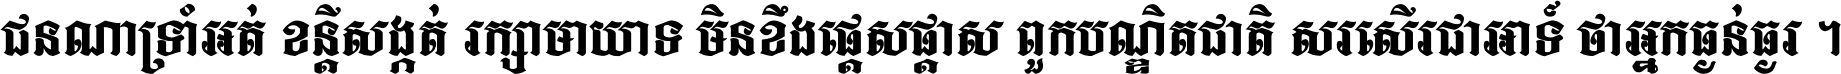 Khmer Chhay Style 3